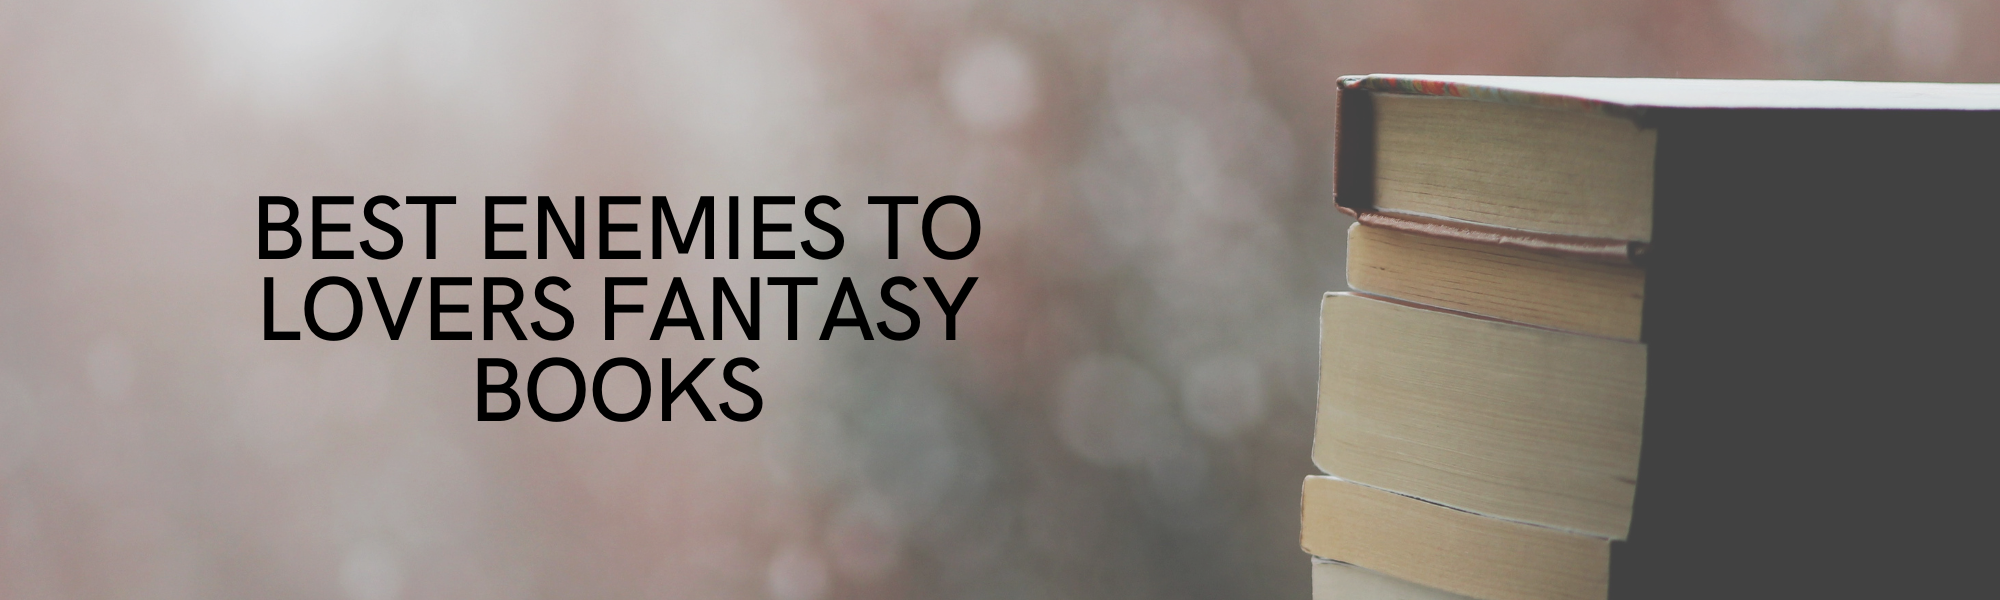 Best enemies to lovers fantasy books